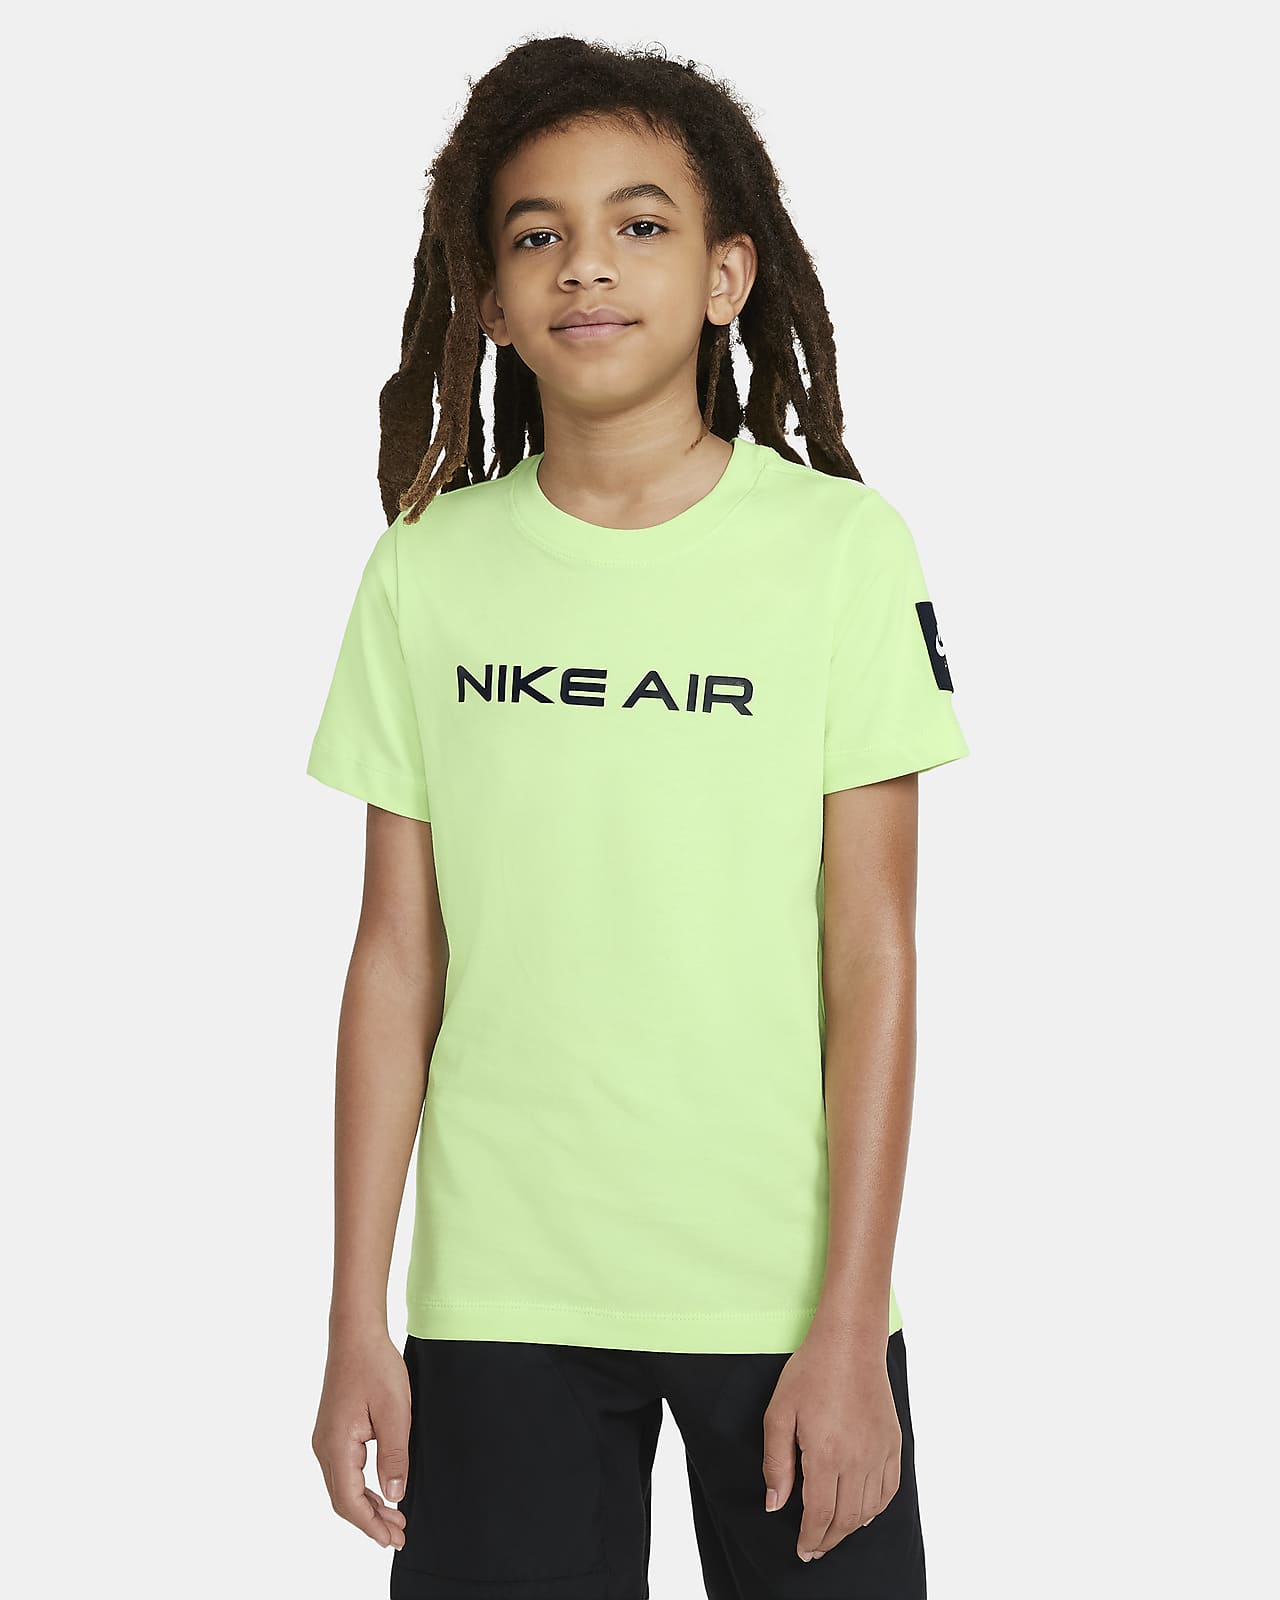 nike air t shirt boys